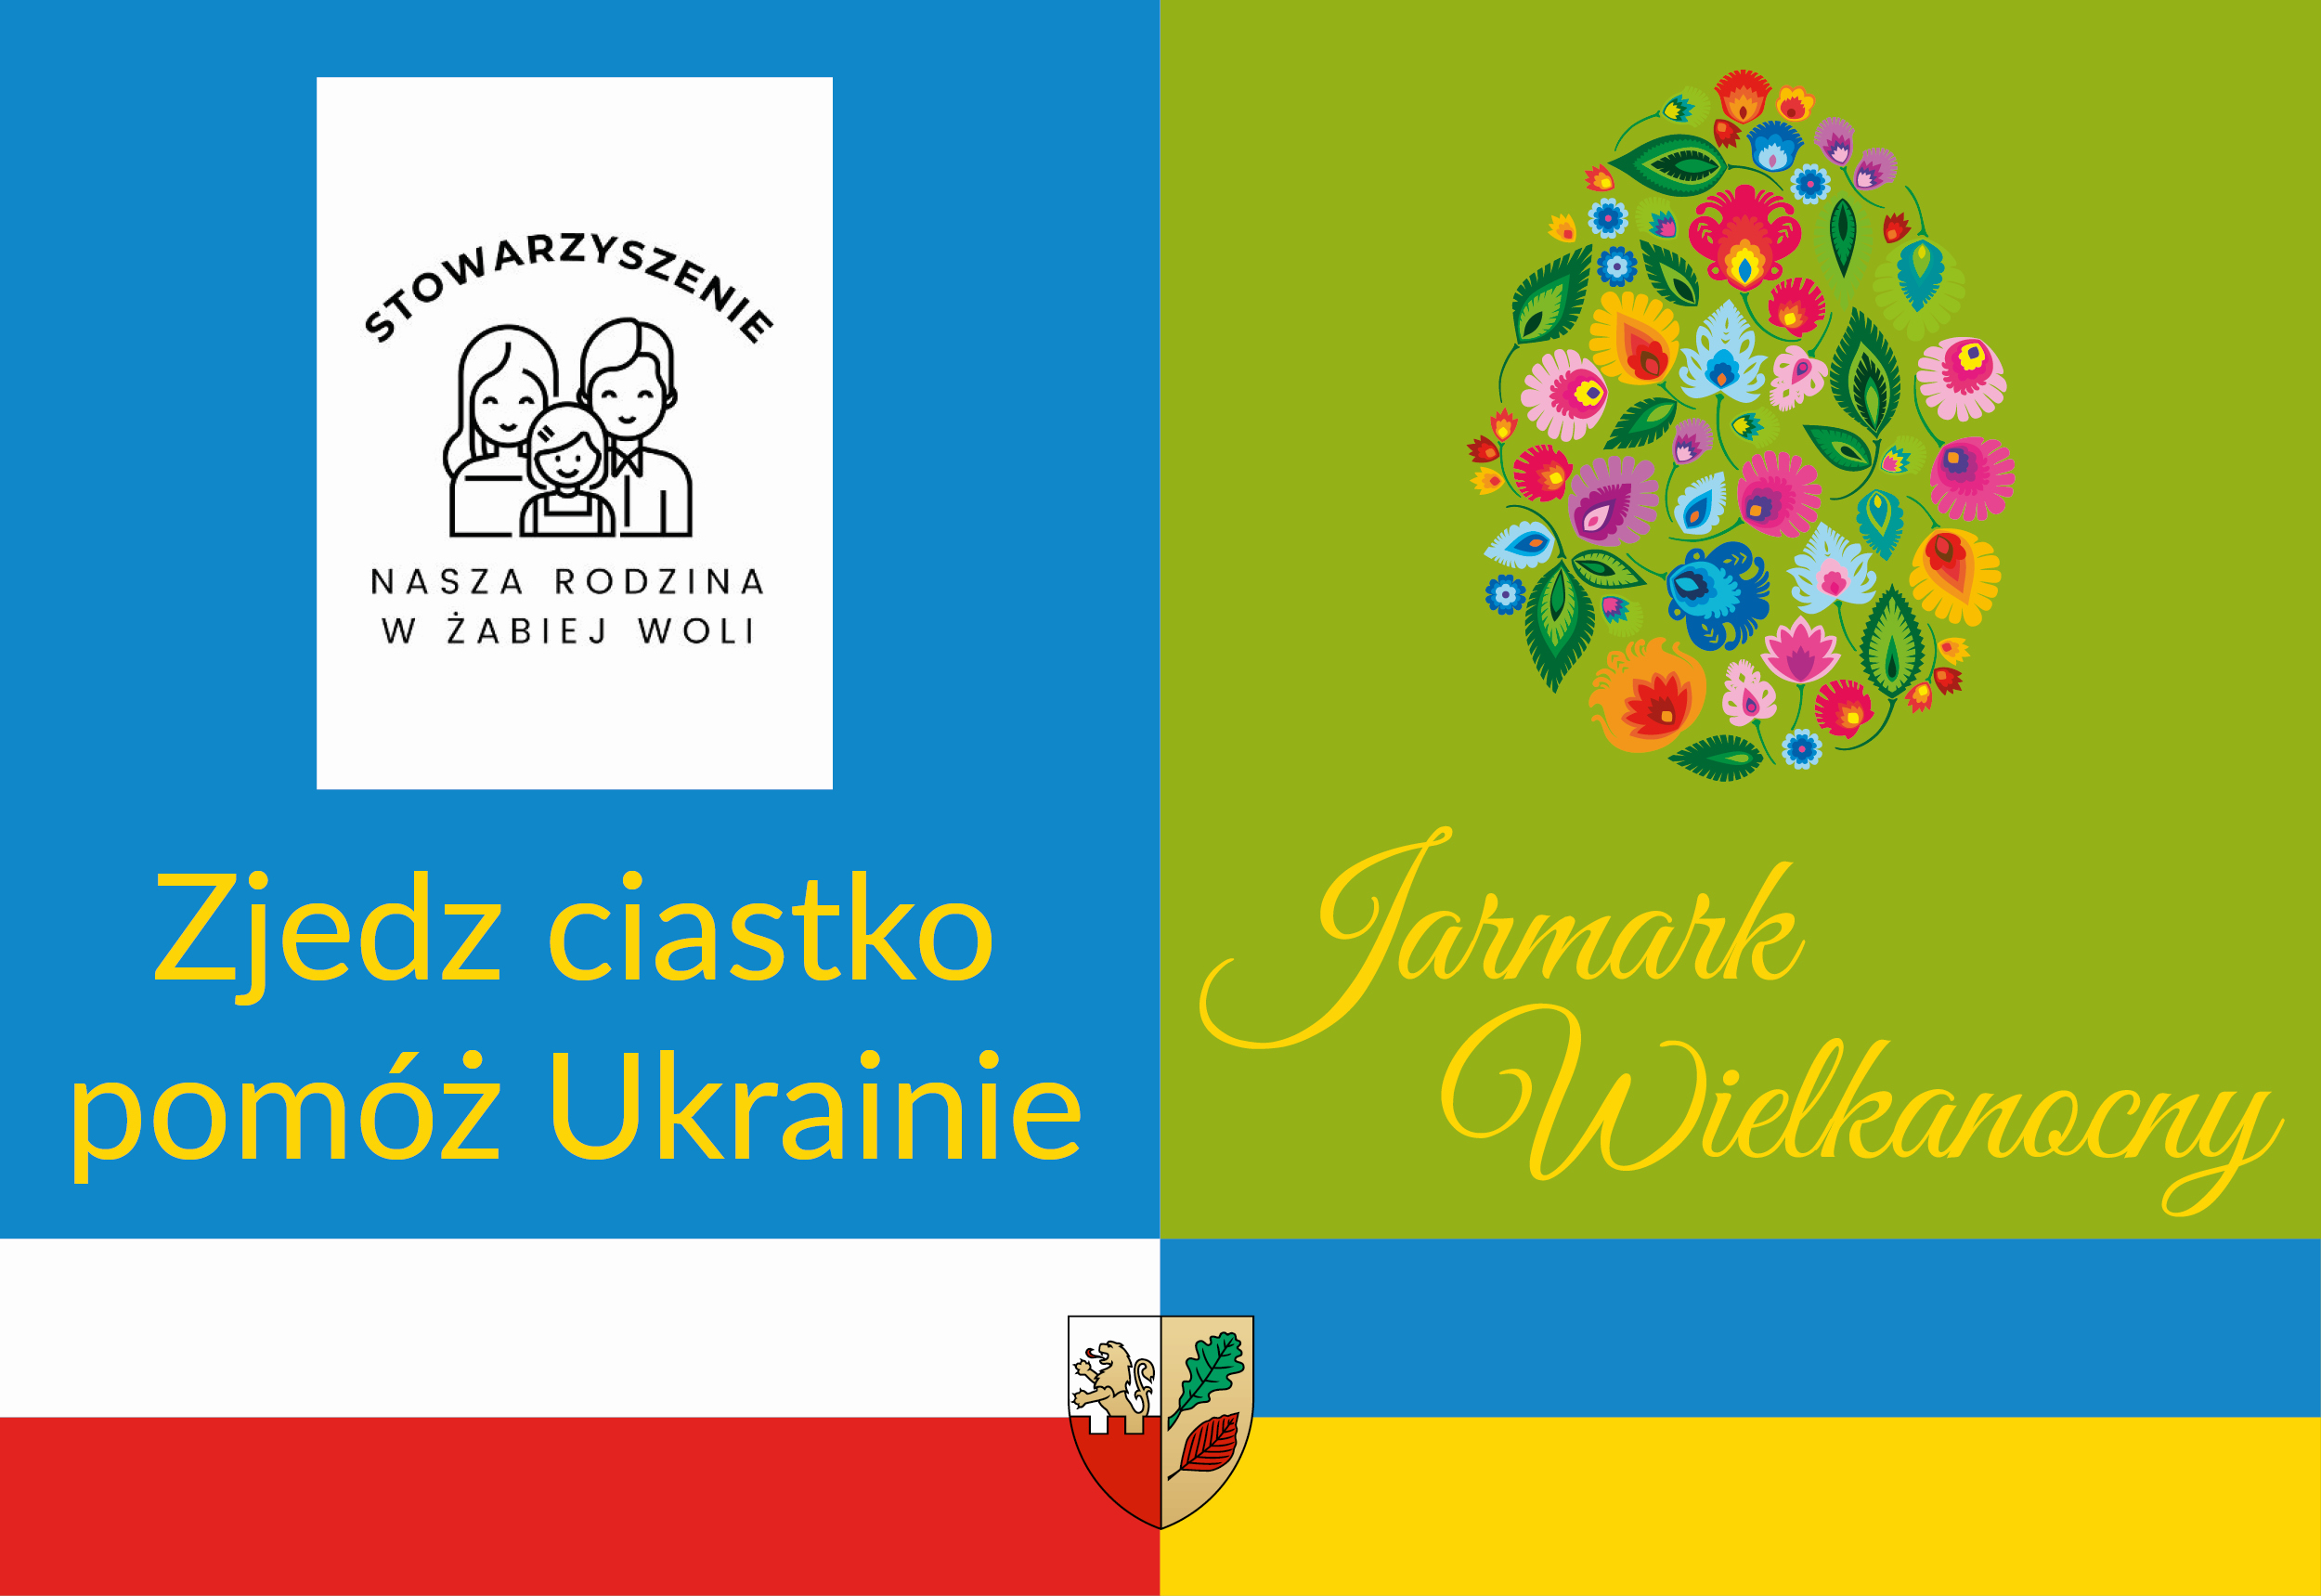 Zbiórka pieniężna ph. „Zjedz ciastko - pomóż Ukrainie”